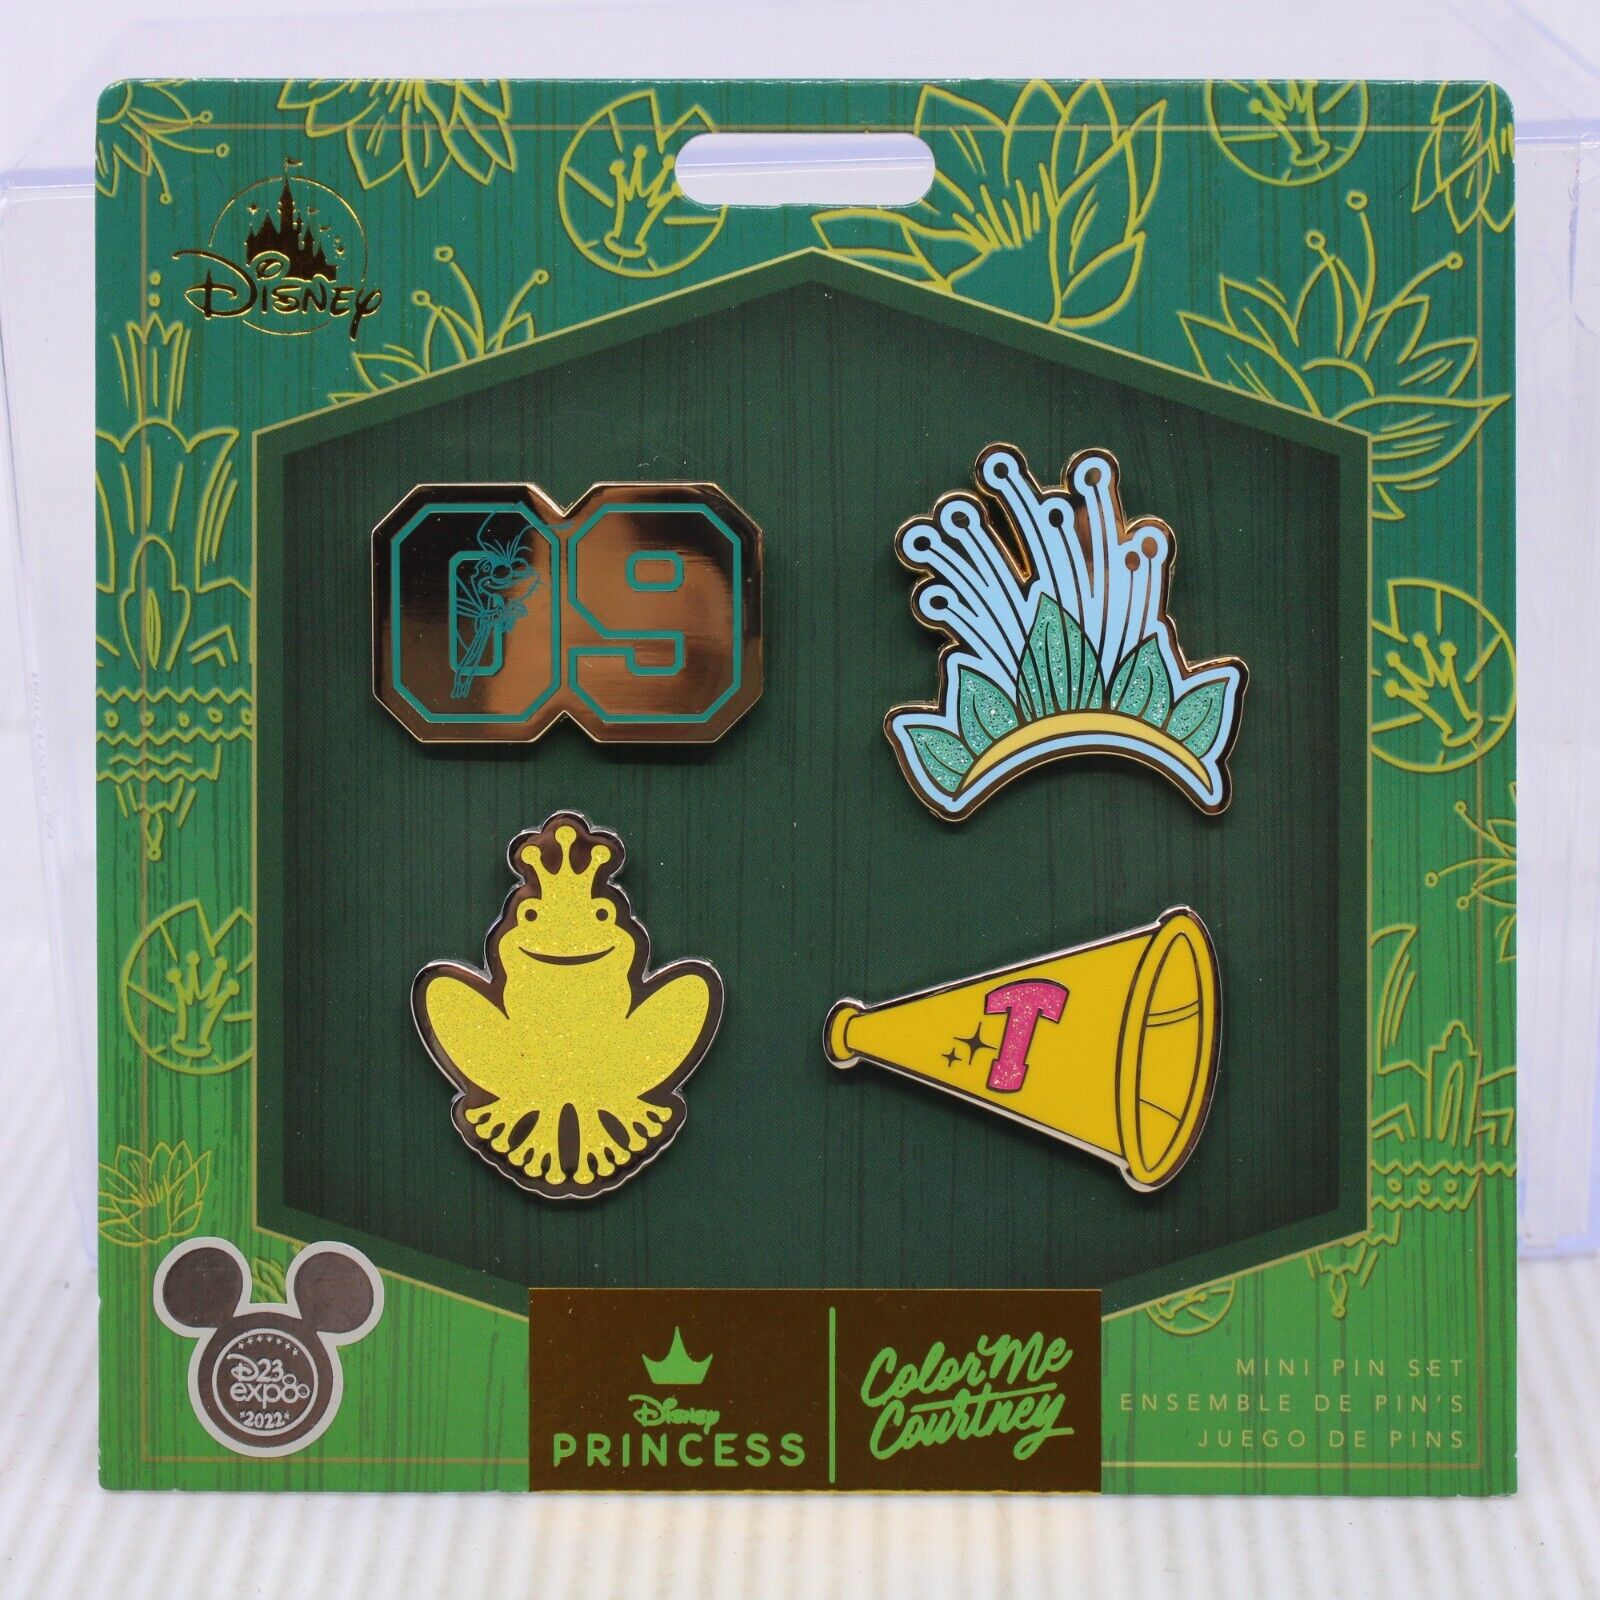 A5 Disney D23 Expo 4 Pin Set Color Me Courtney Tiana Princess and the Frog